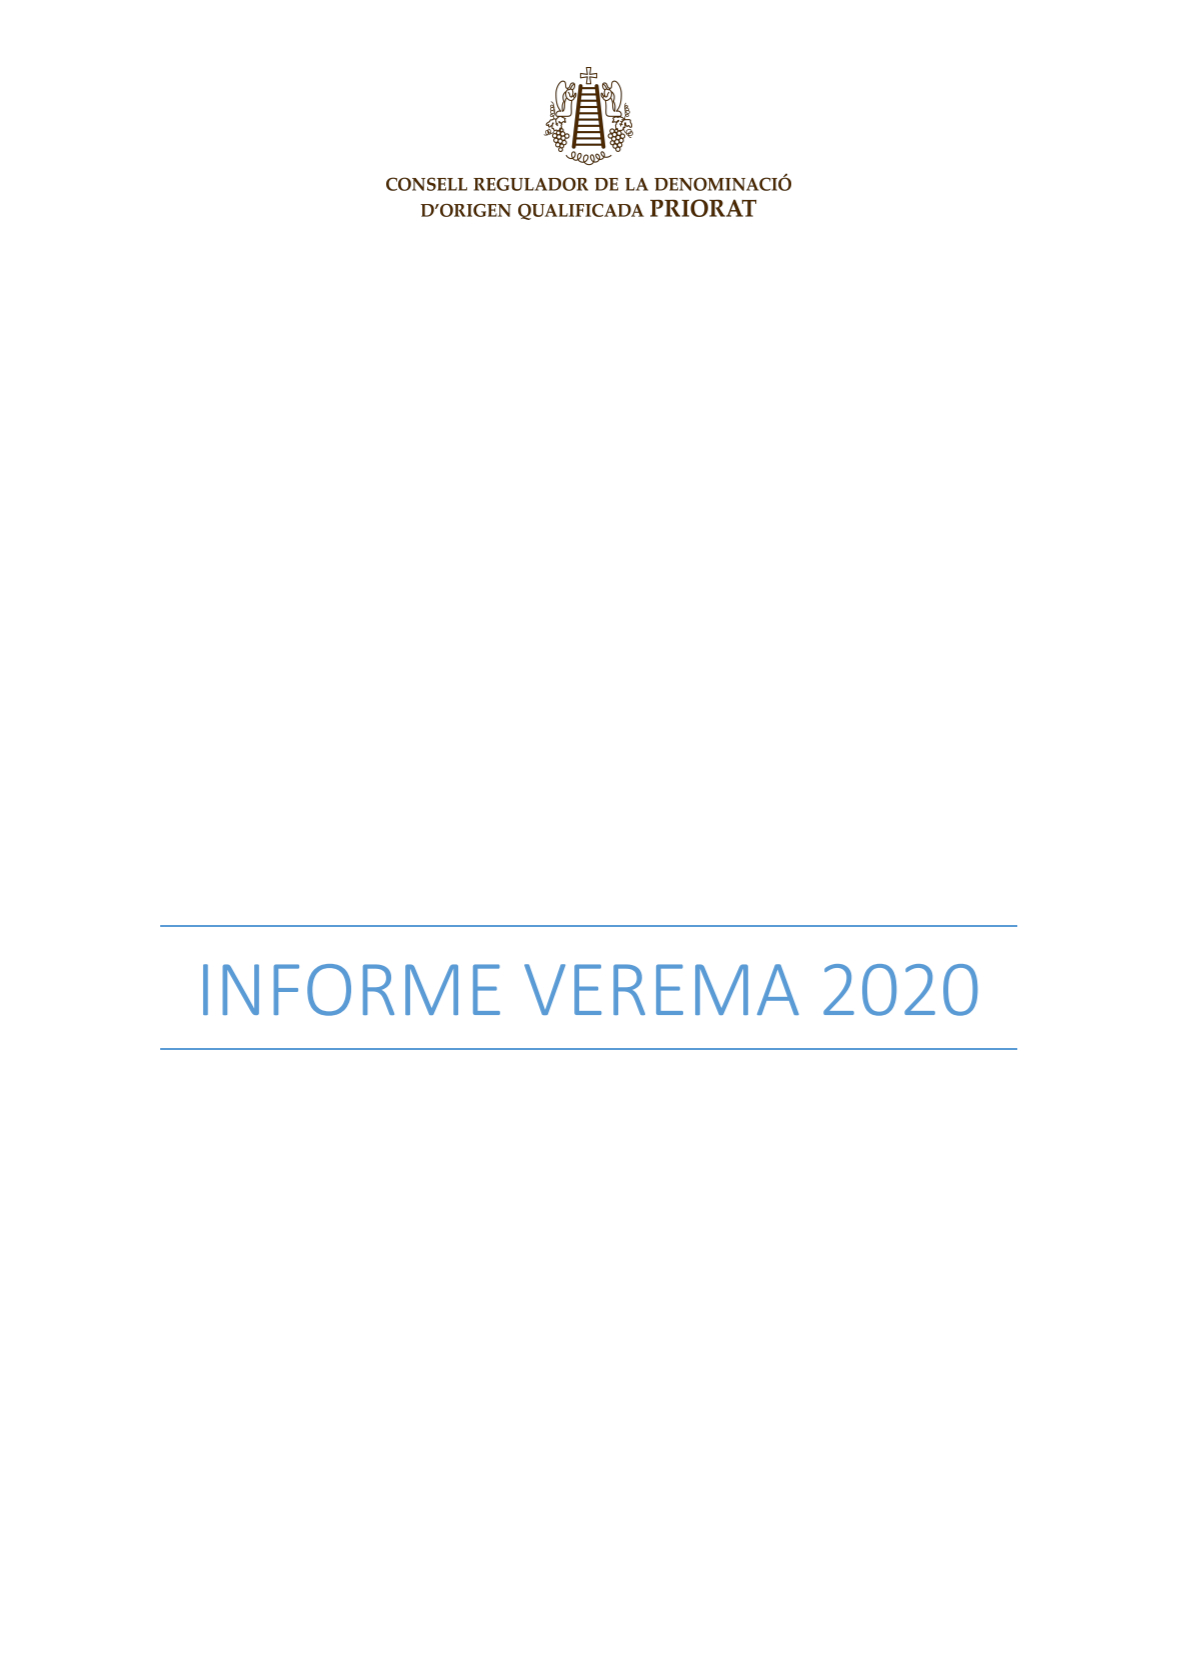 Informe de verema 2020